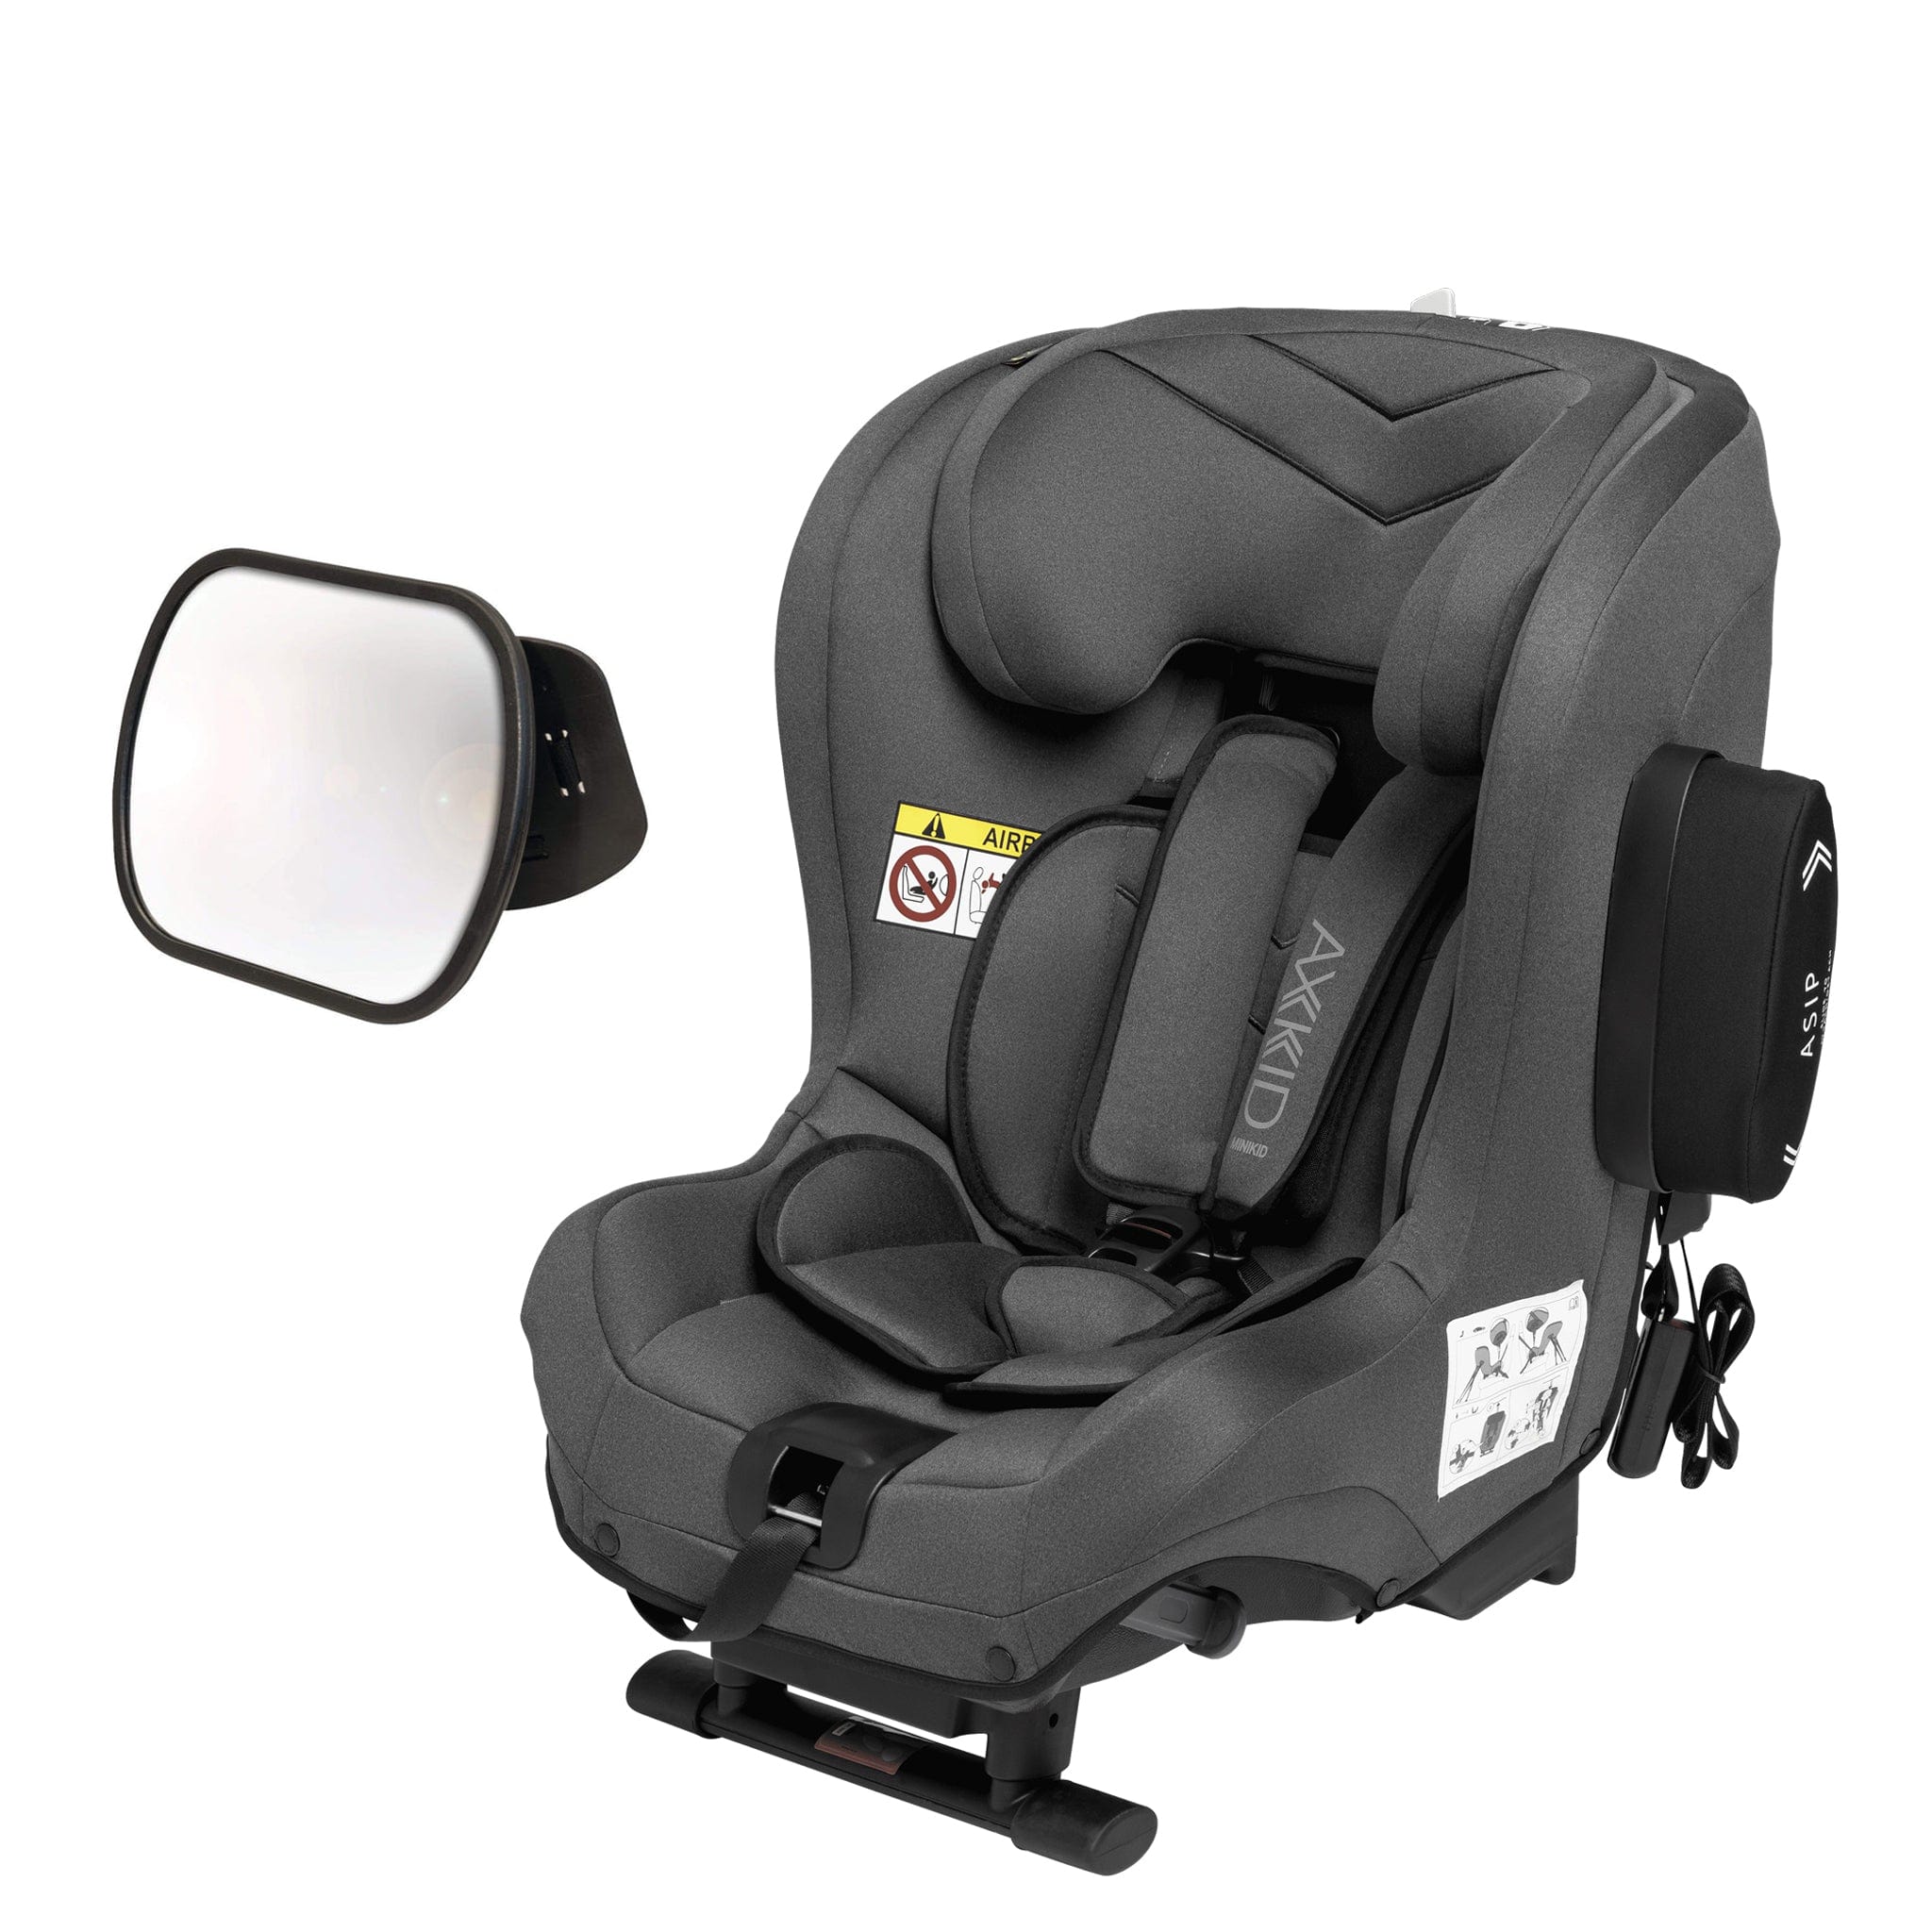 Axkid rear facing car seats Axkid Minikid 2 - Granite Melange Premium & Free Mirror 10531-GRA-MEL